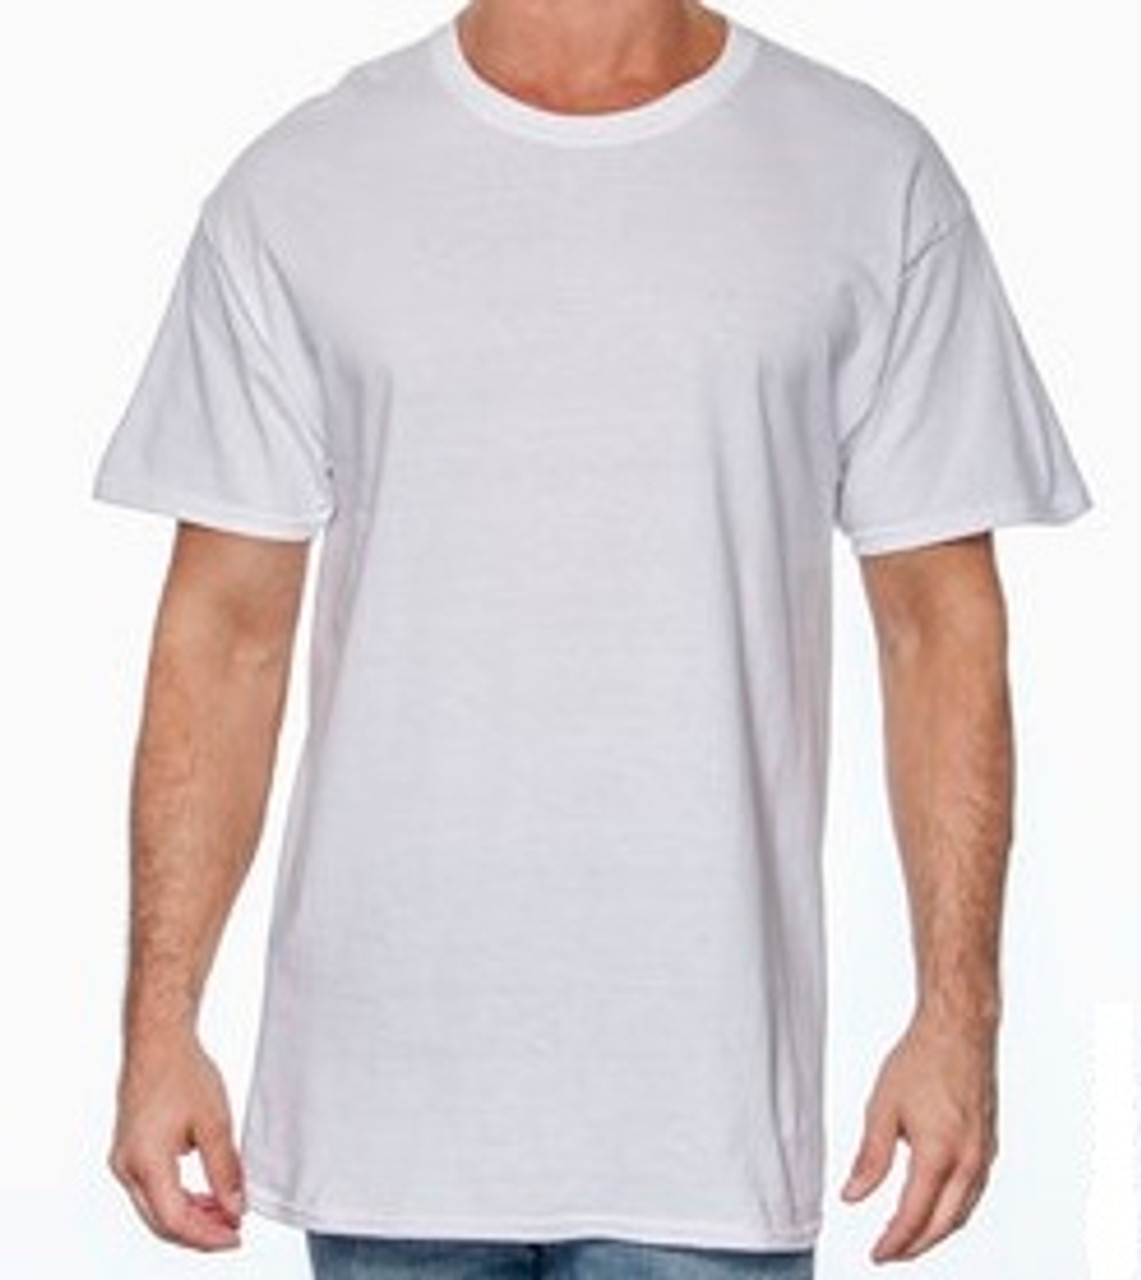 Large - Adult - White - Gildan - Custom T-shirt